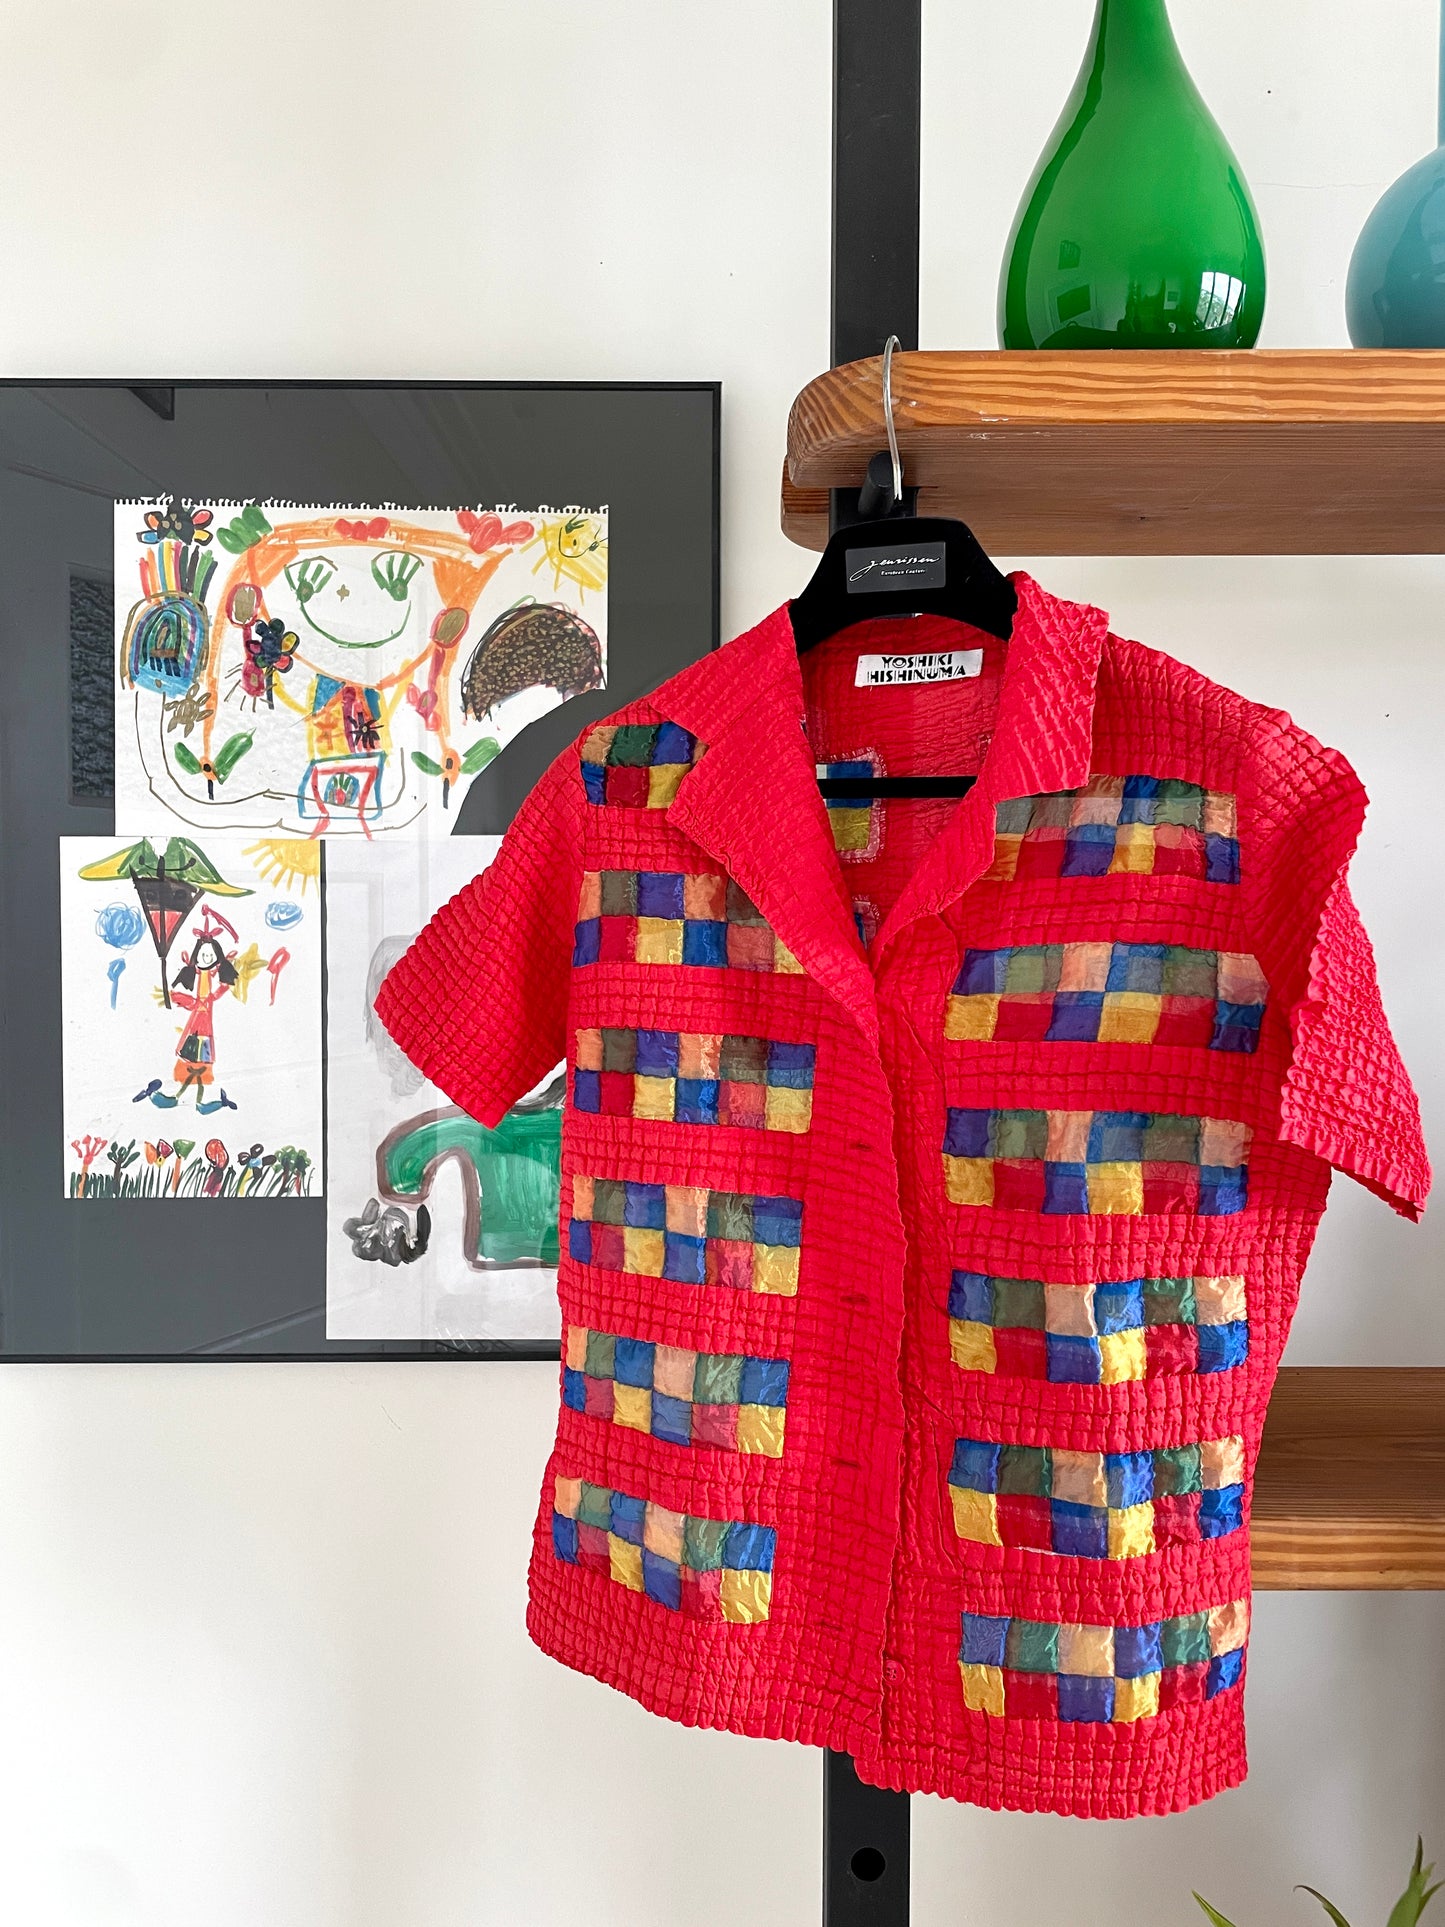 Yoshiki Hishinuma 2000's wrinkled red shirt with multicolor transparent squares